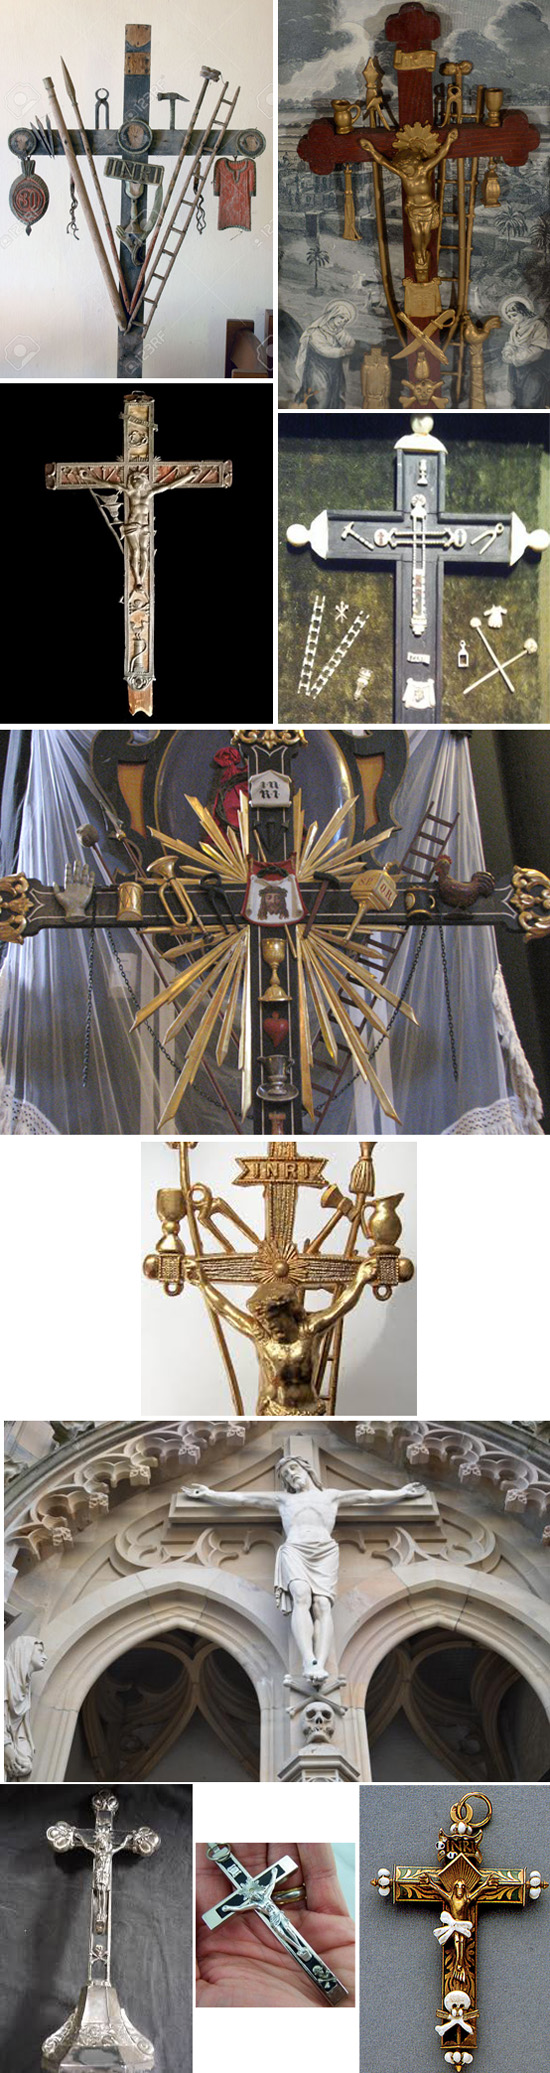 Crosses with symbols of Passsion